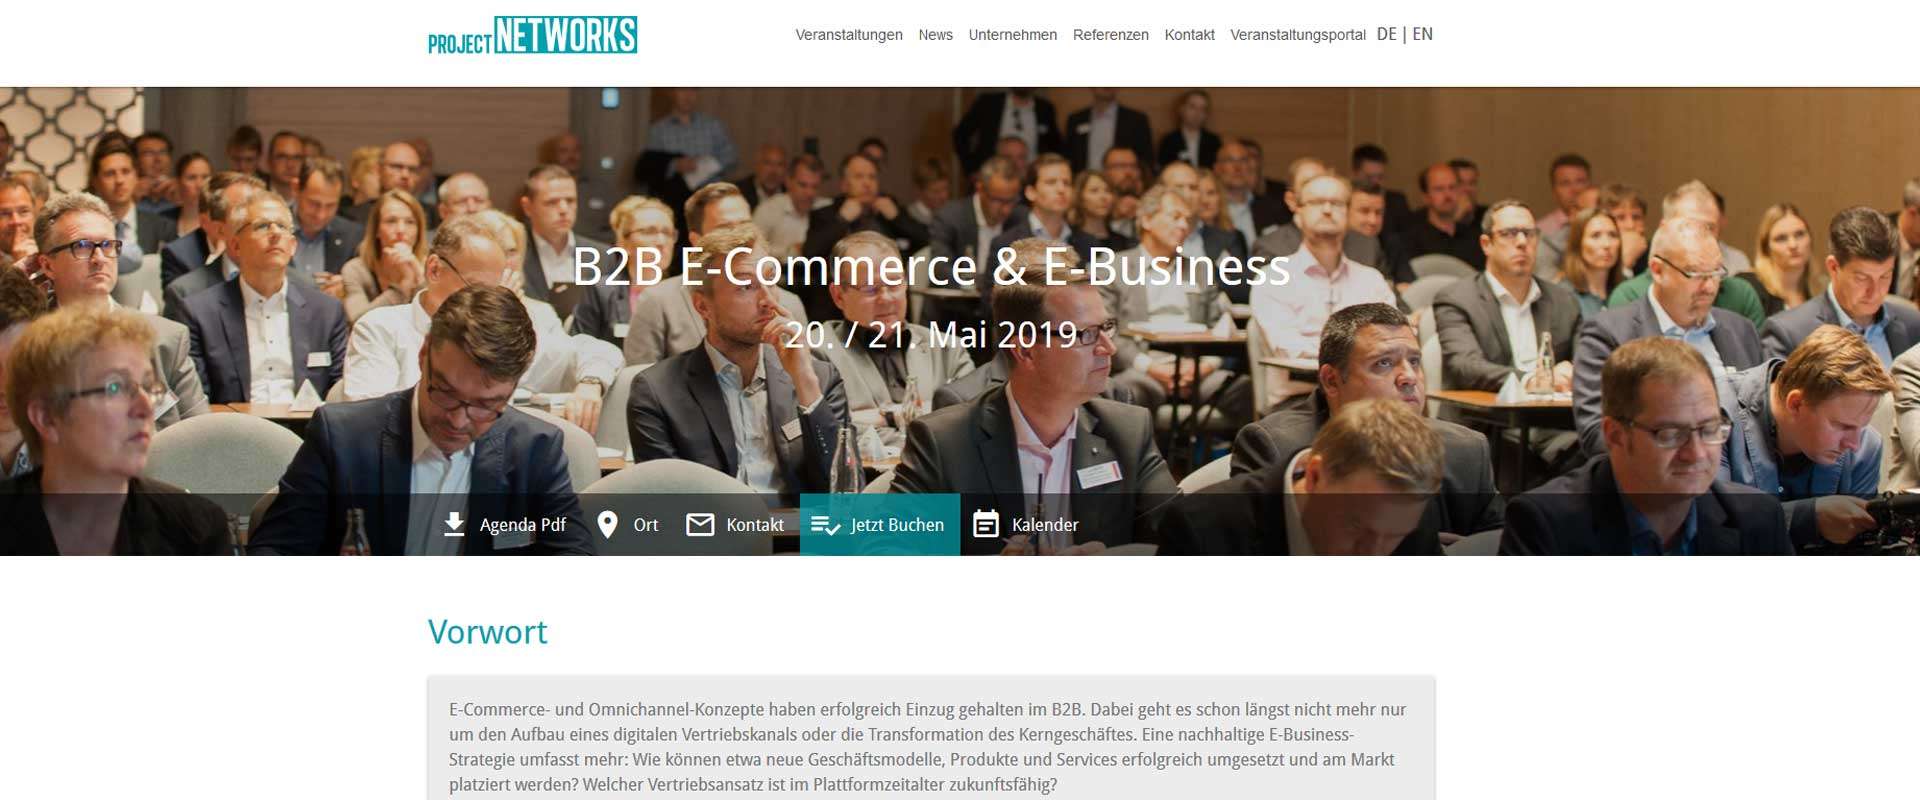 Strategiegipfel B2B E-Commerce & E-Business